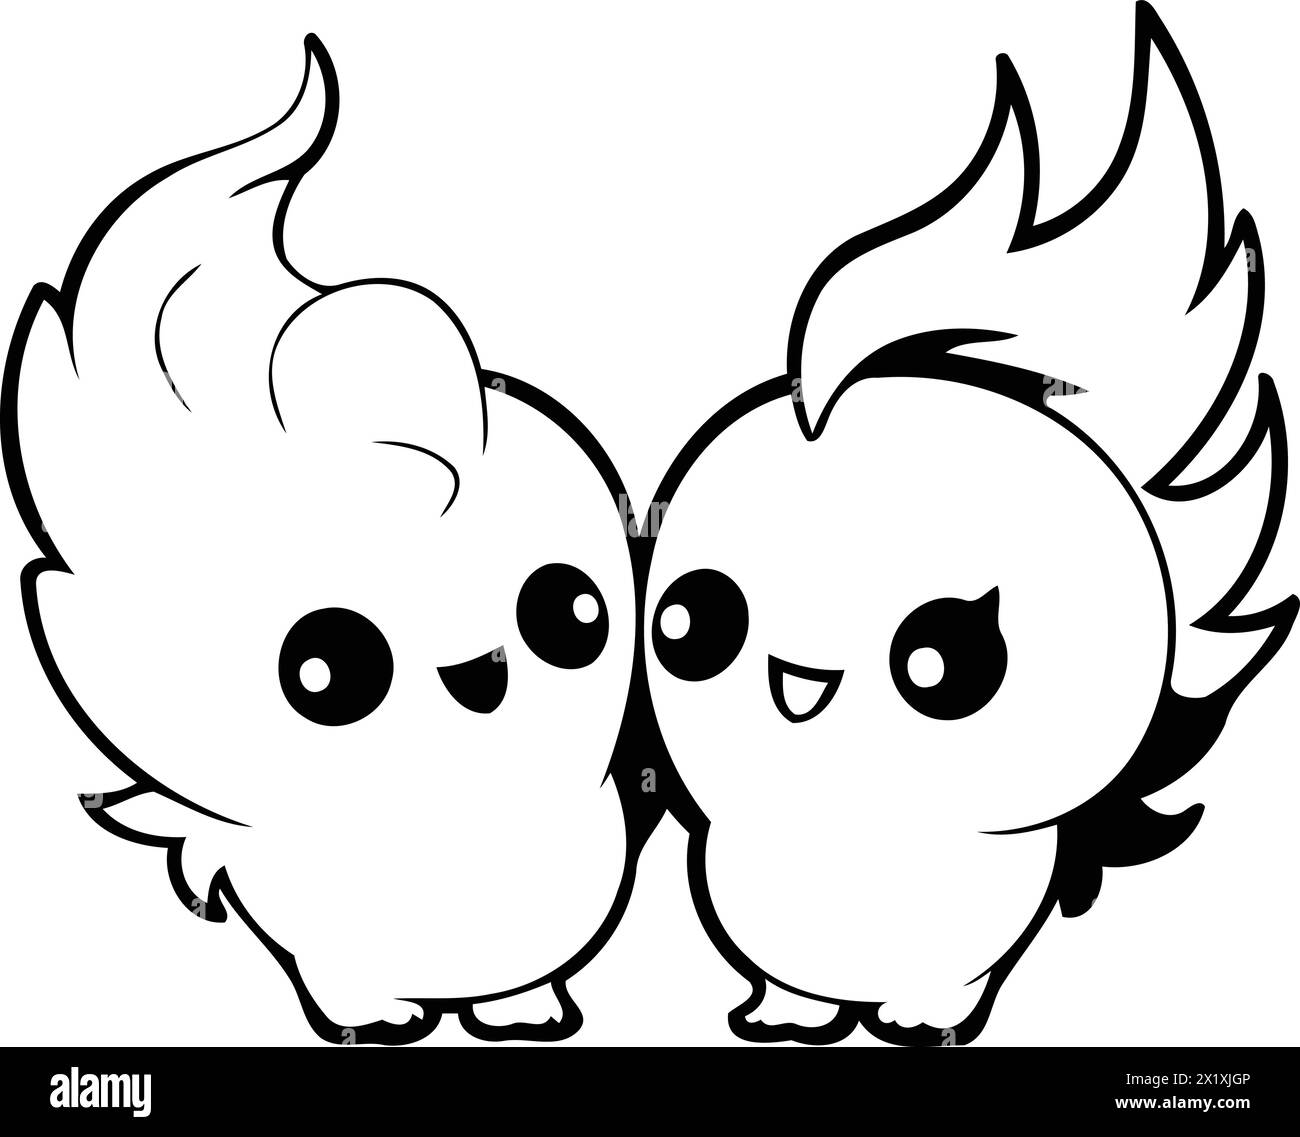 Cute cartoon kawaii couple of fire birds. Vector illustration. Stock Vector